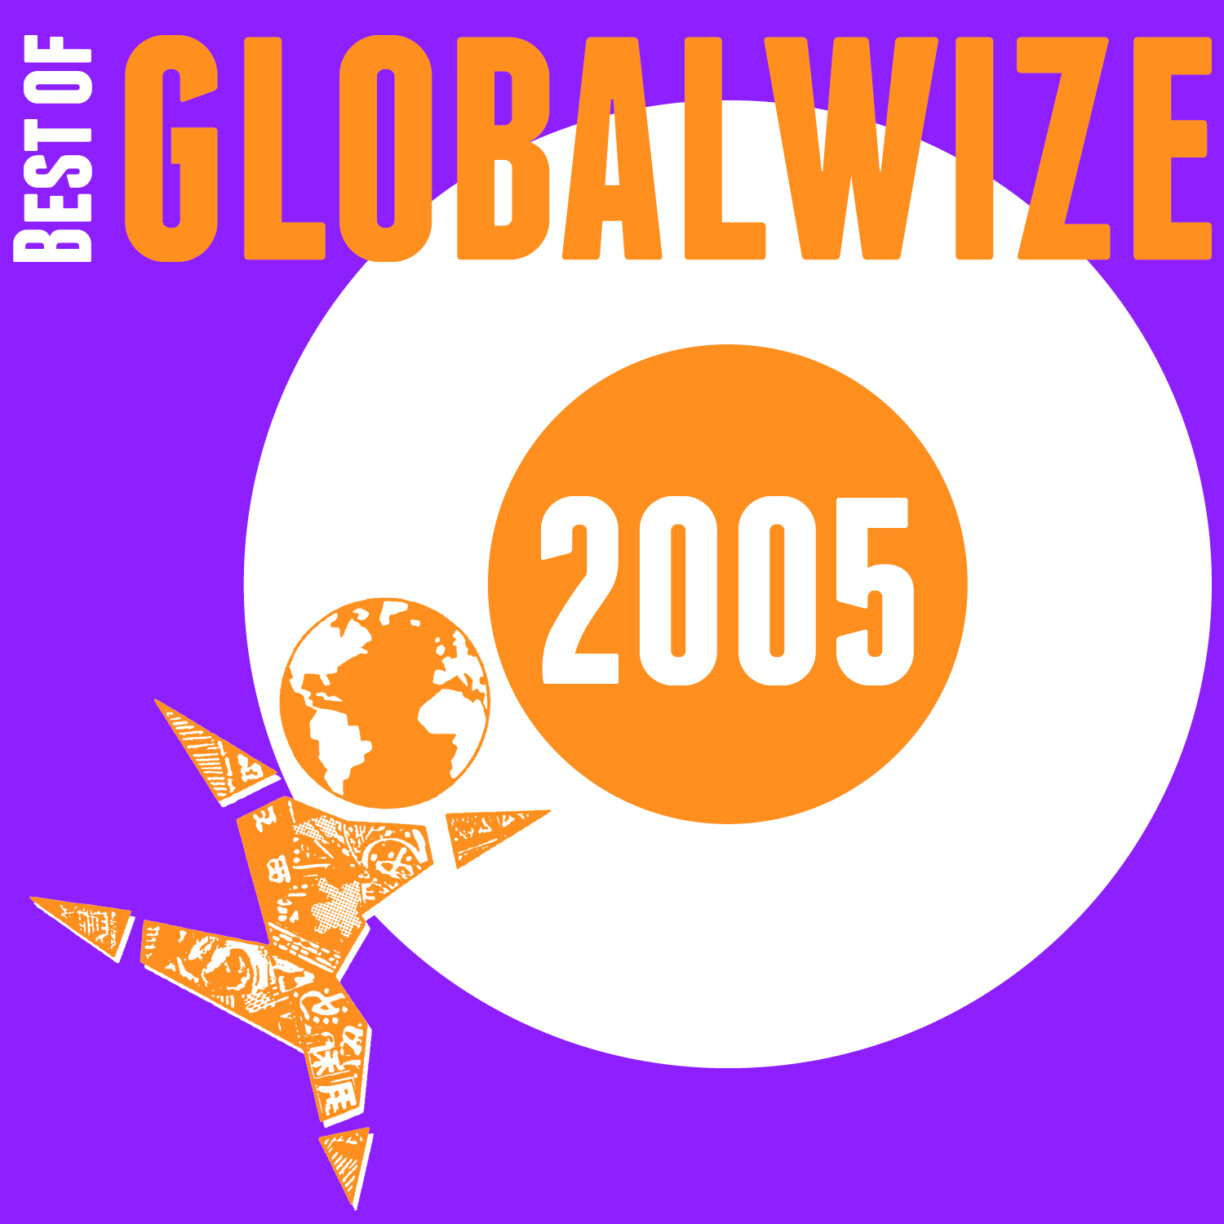 GreedyforBestMusic-Greedio-Jean-Trouillet-Best-of-Globalwize-2005-Spotify-Playlist